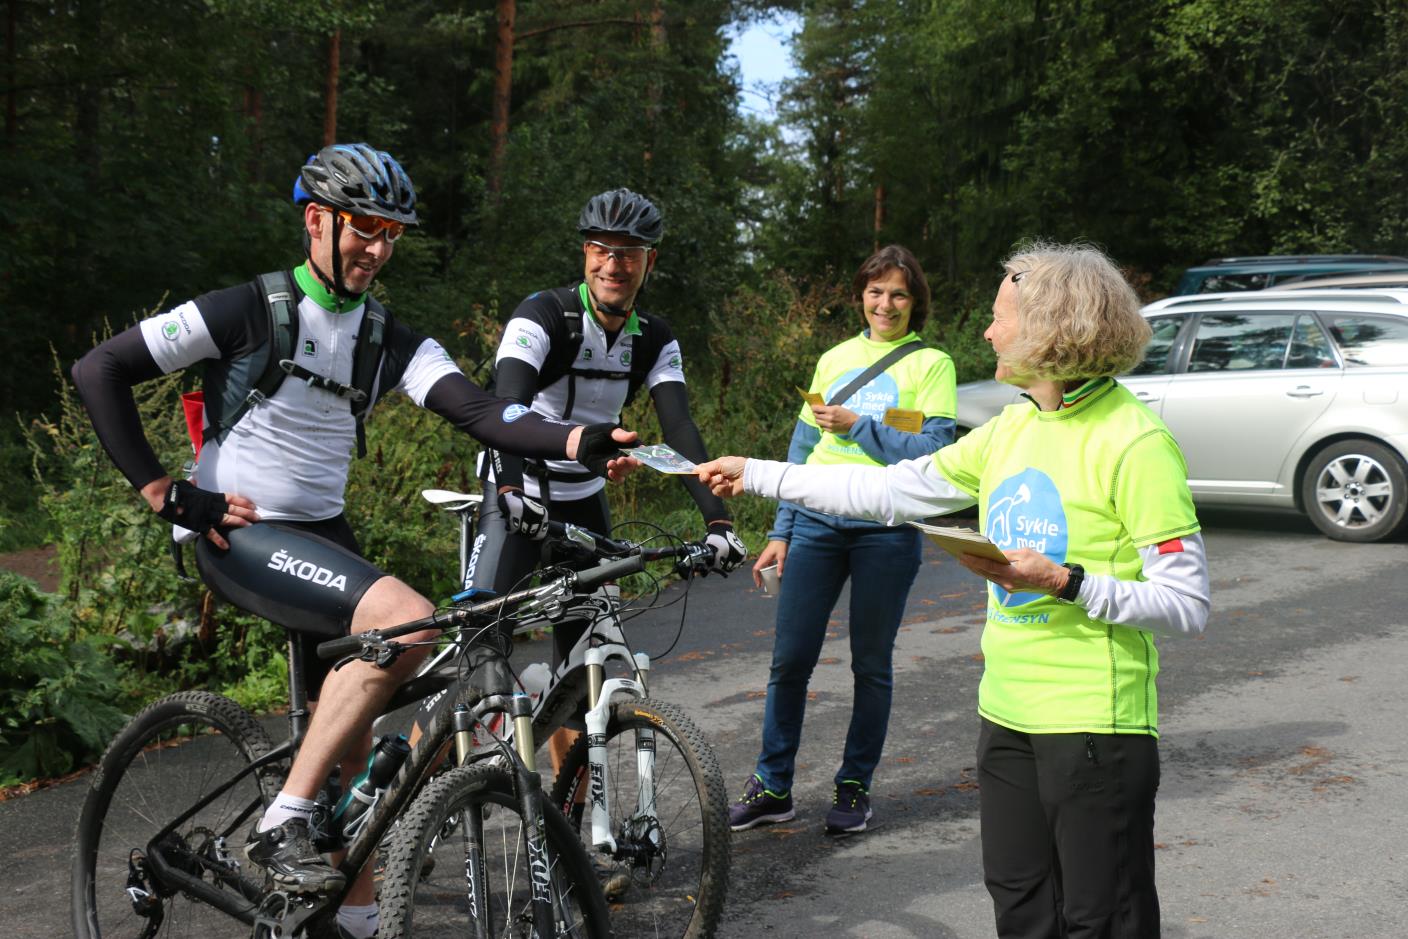 Respons i Marka Hovedmålgruppa, syklistene: Svært fornøyde "mange